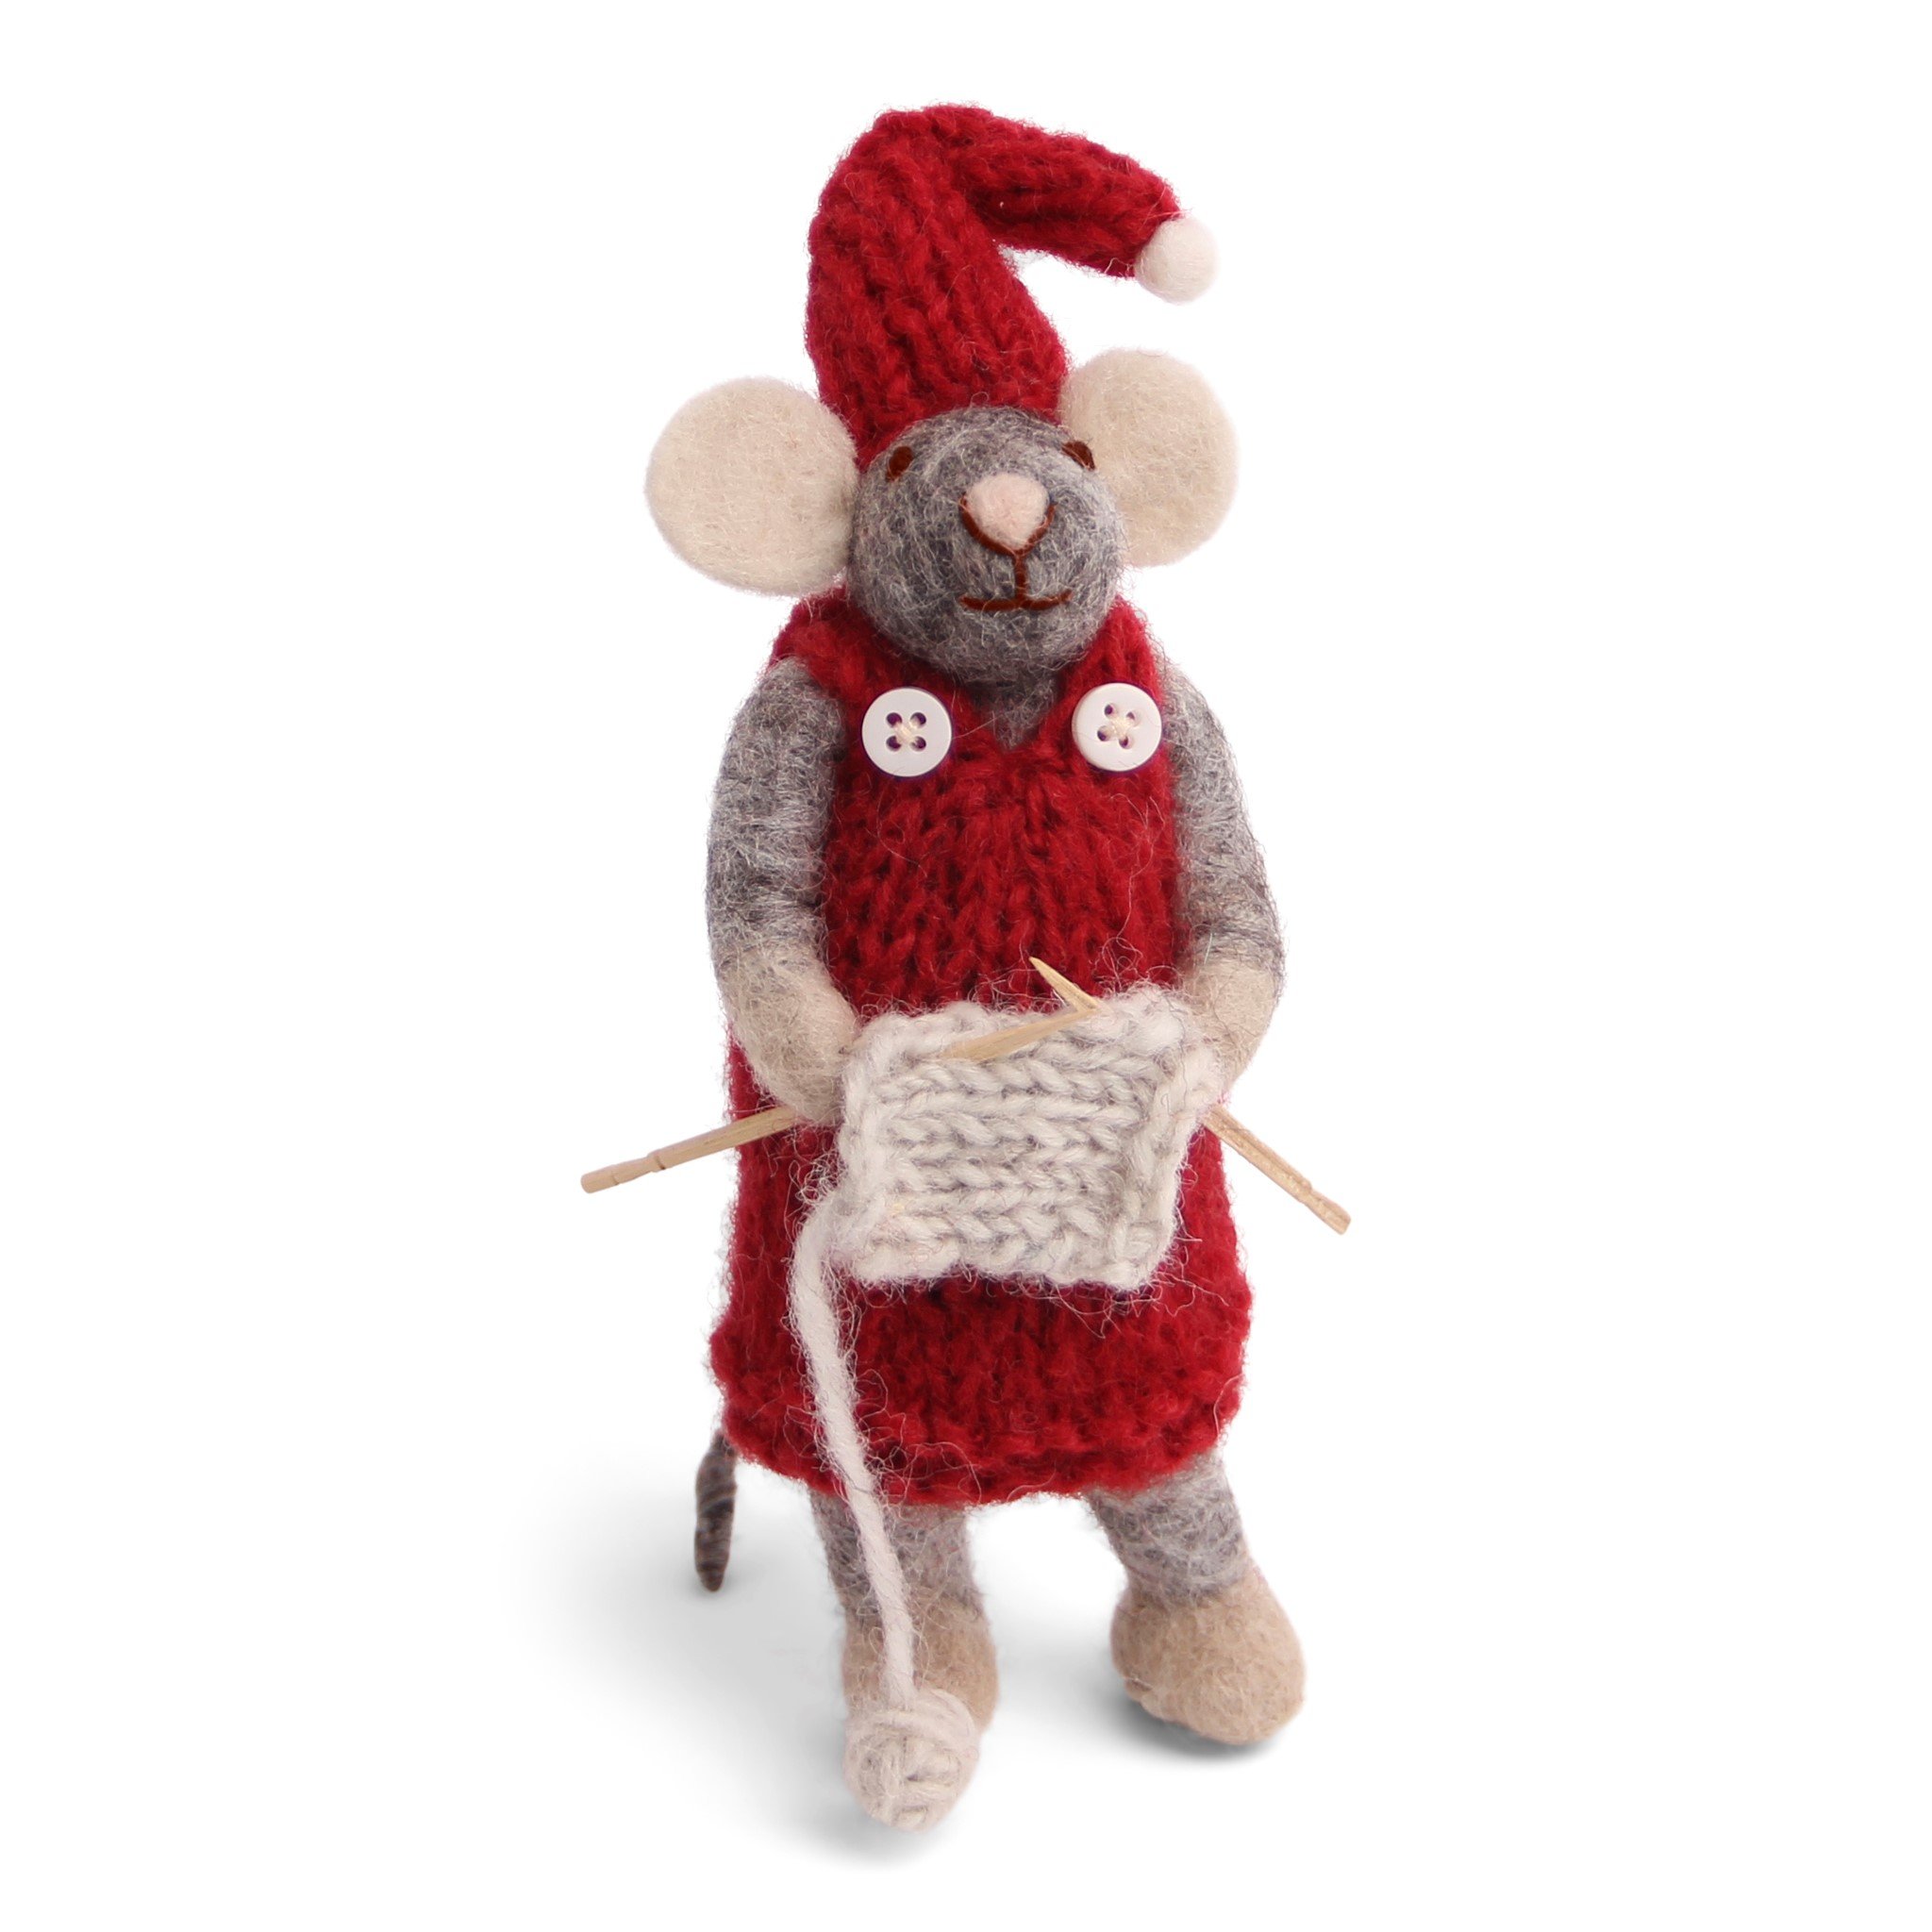 Filtet gr mus med rd kjole og strikketj fra Gry & Sif, 14 cm